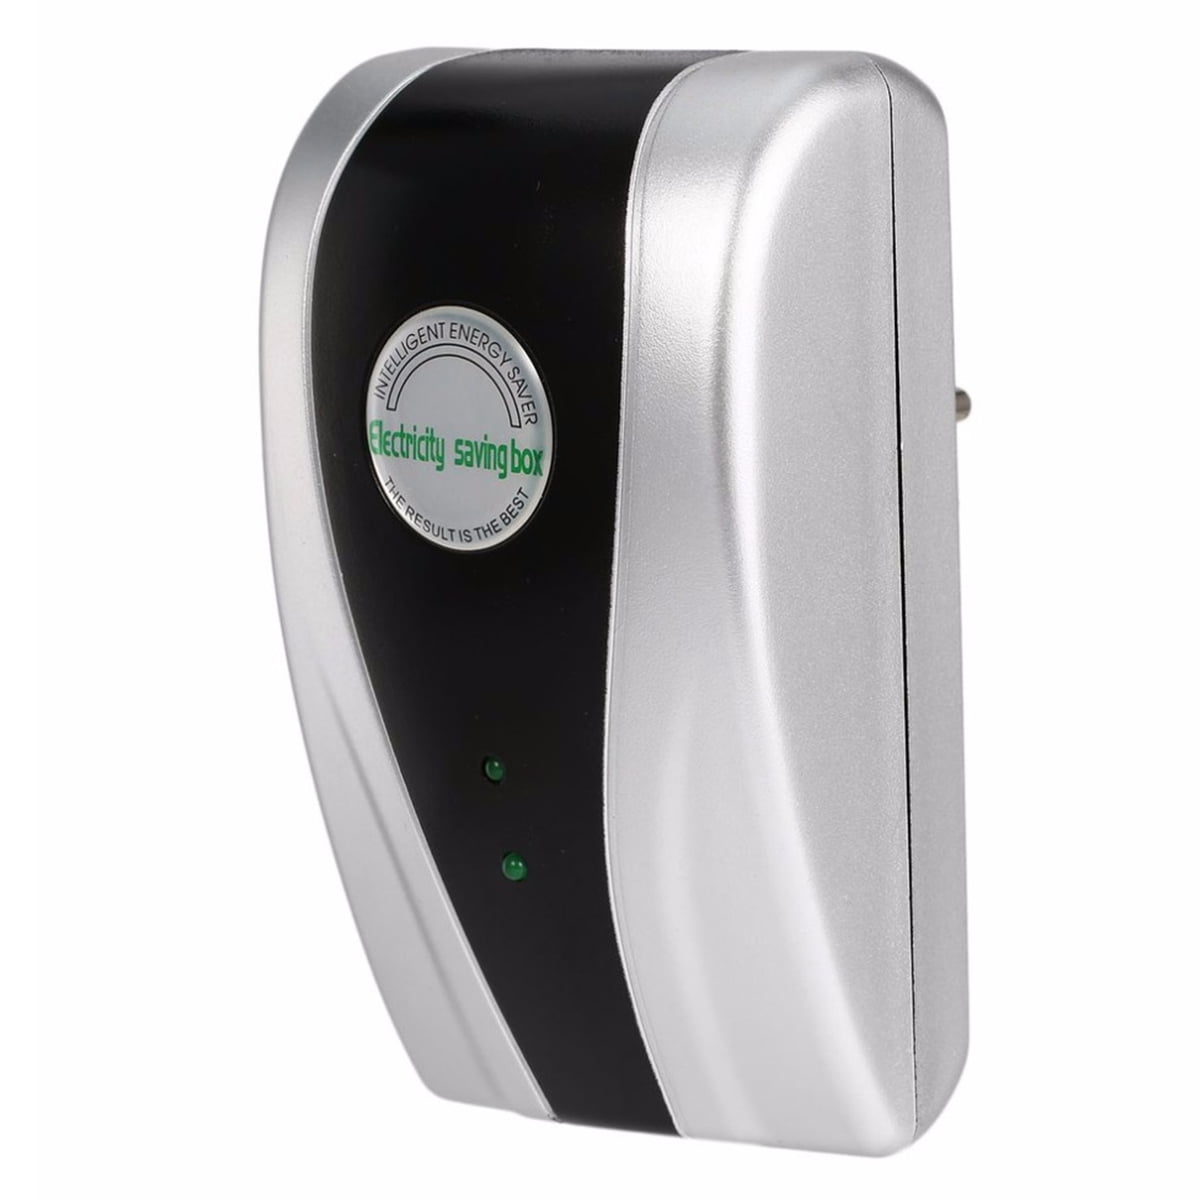 EU Plug with Capacitance FREE SHIPPING US EcoWatt365 Power saving box UK 